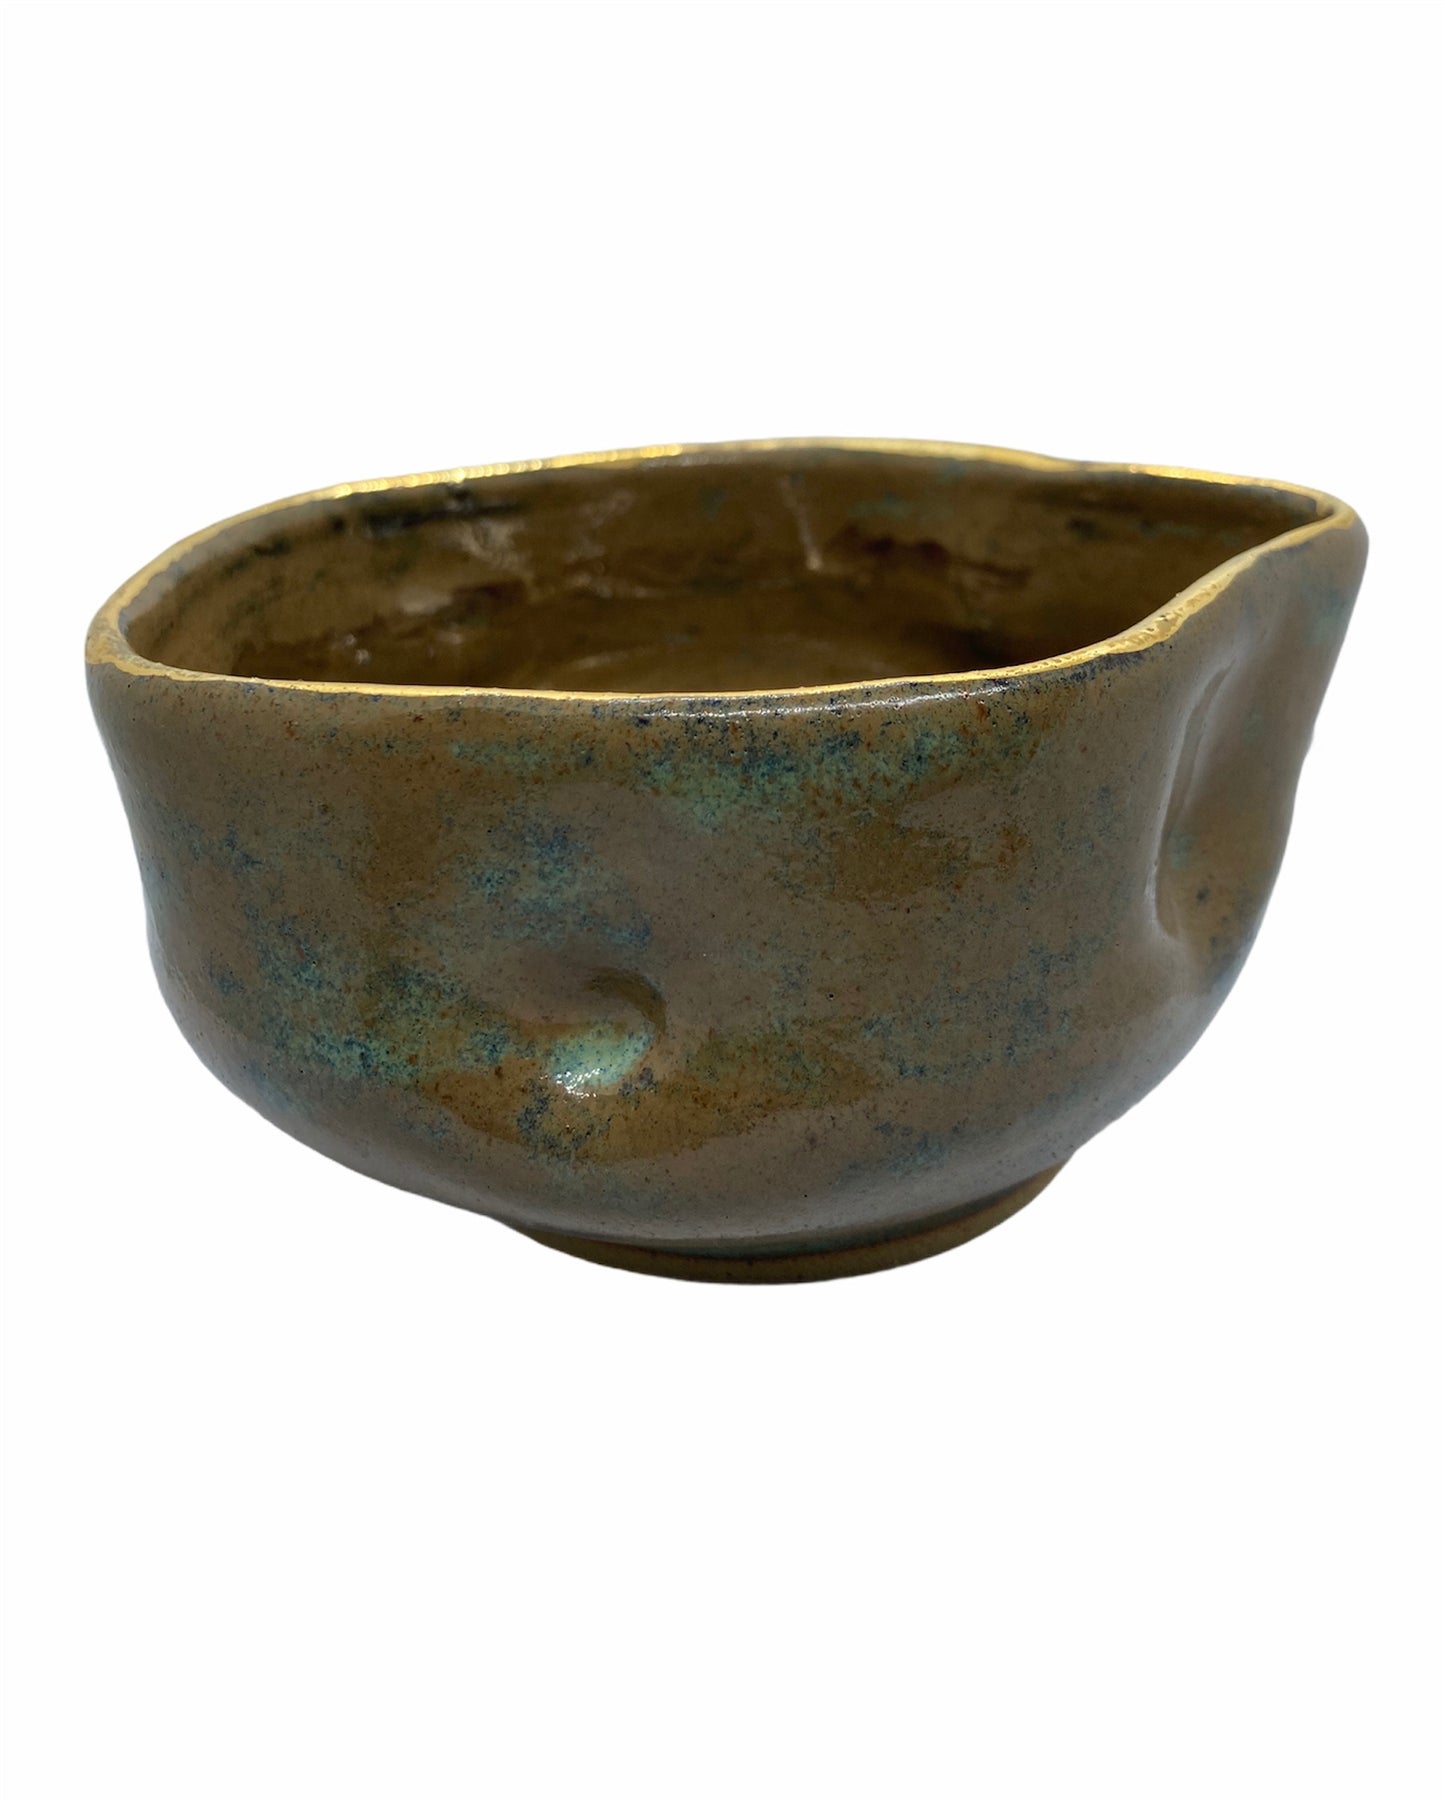 Rustic Deformed bowl and gold lustre